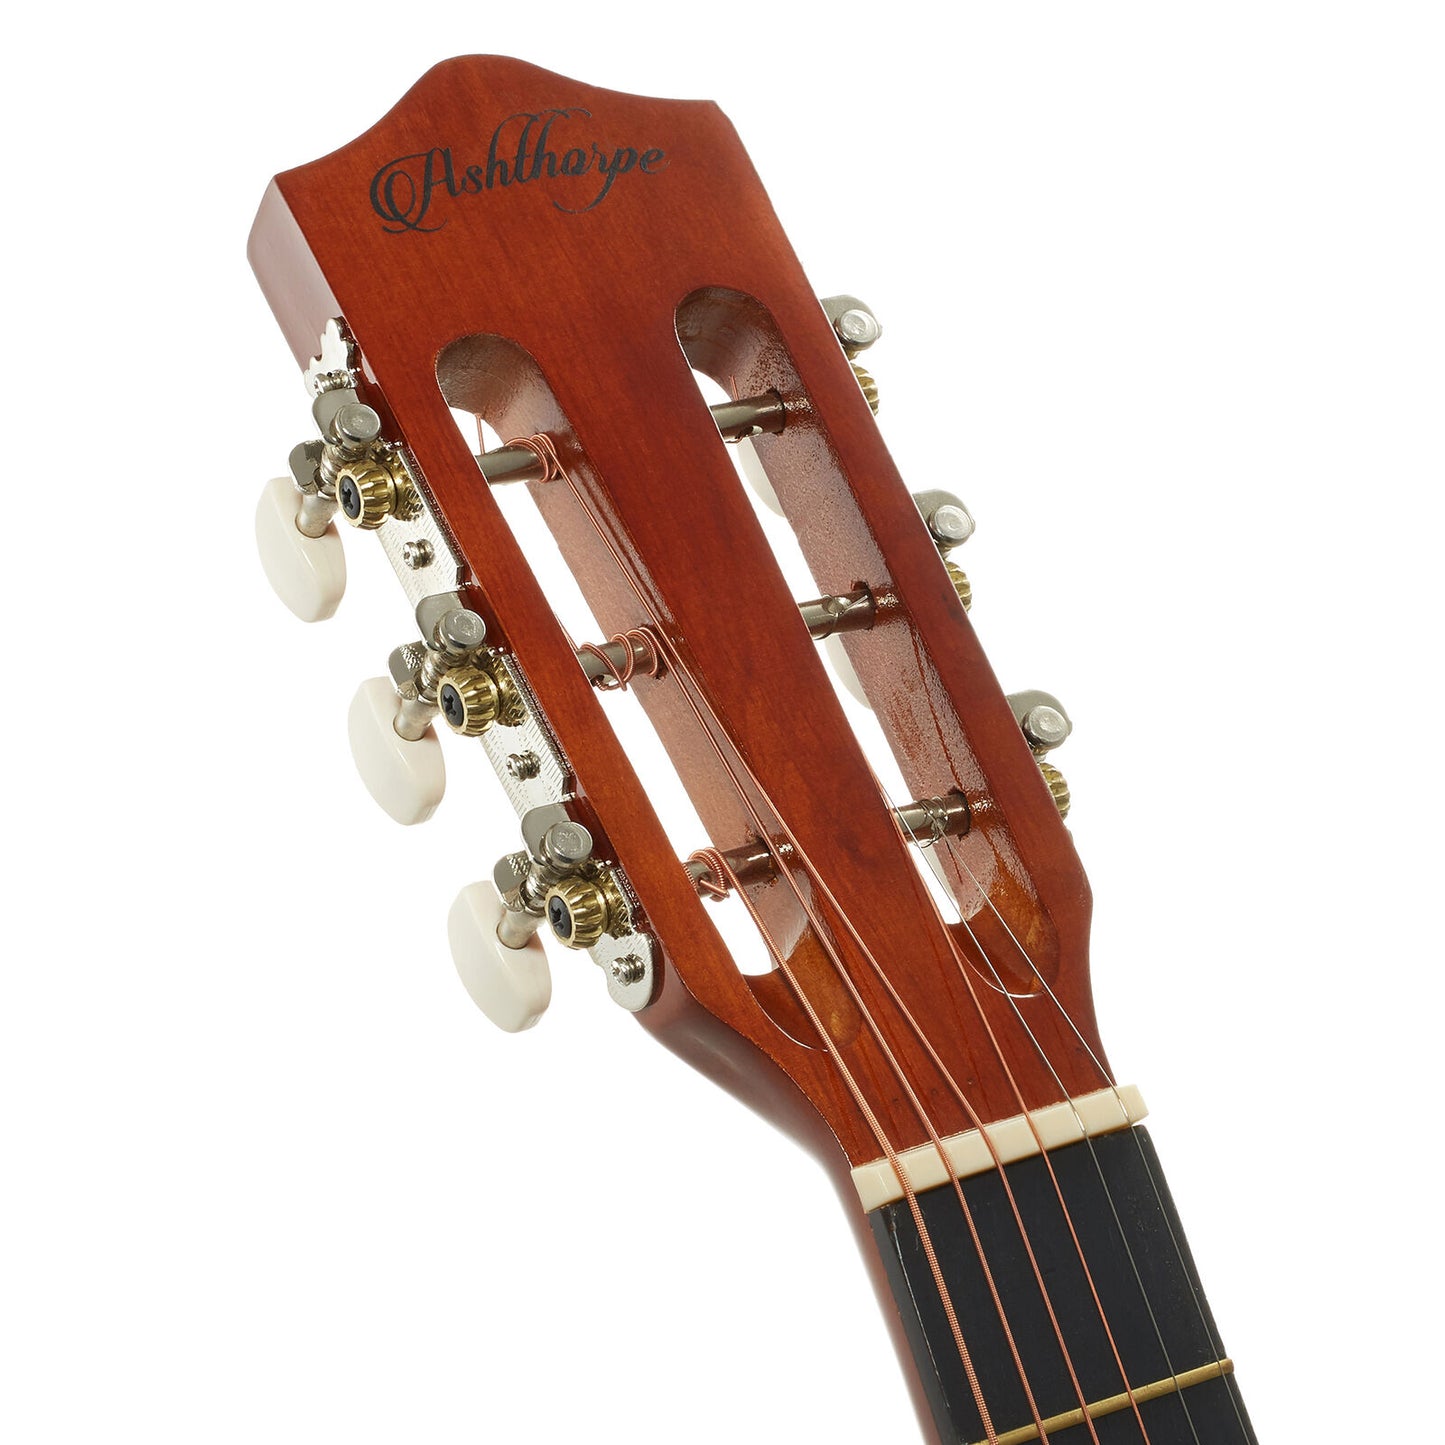 38-inch Beginner Acoustic Guitar Package - Starter Bundle Kit & Accessories